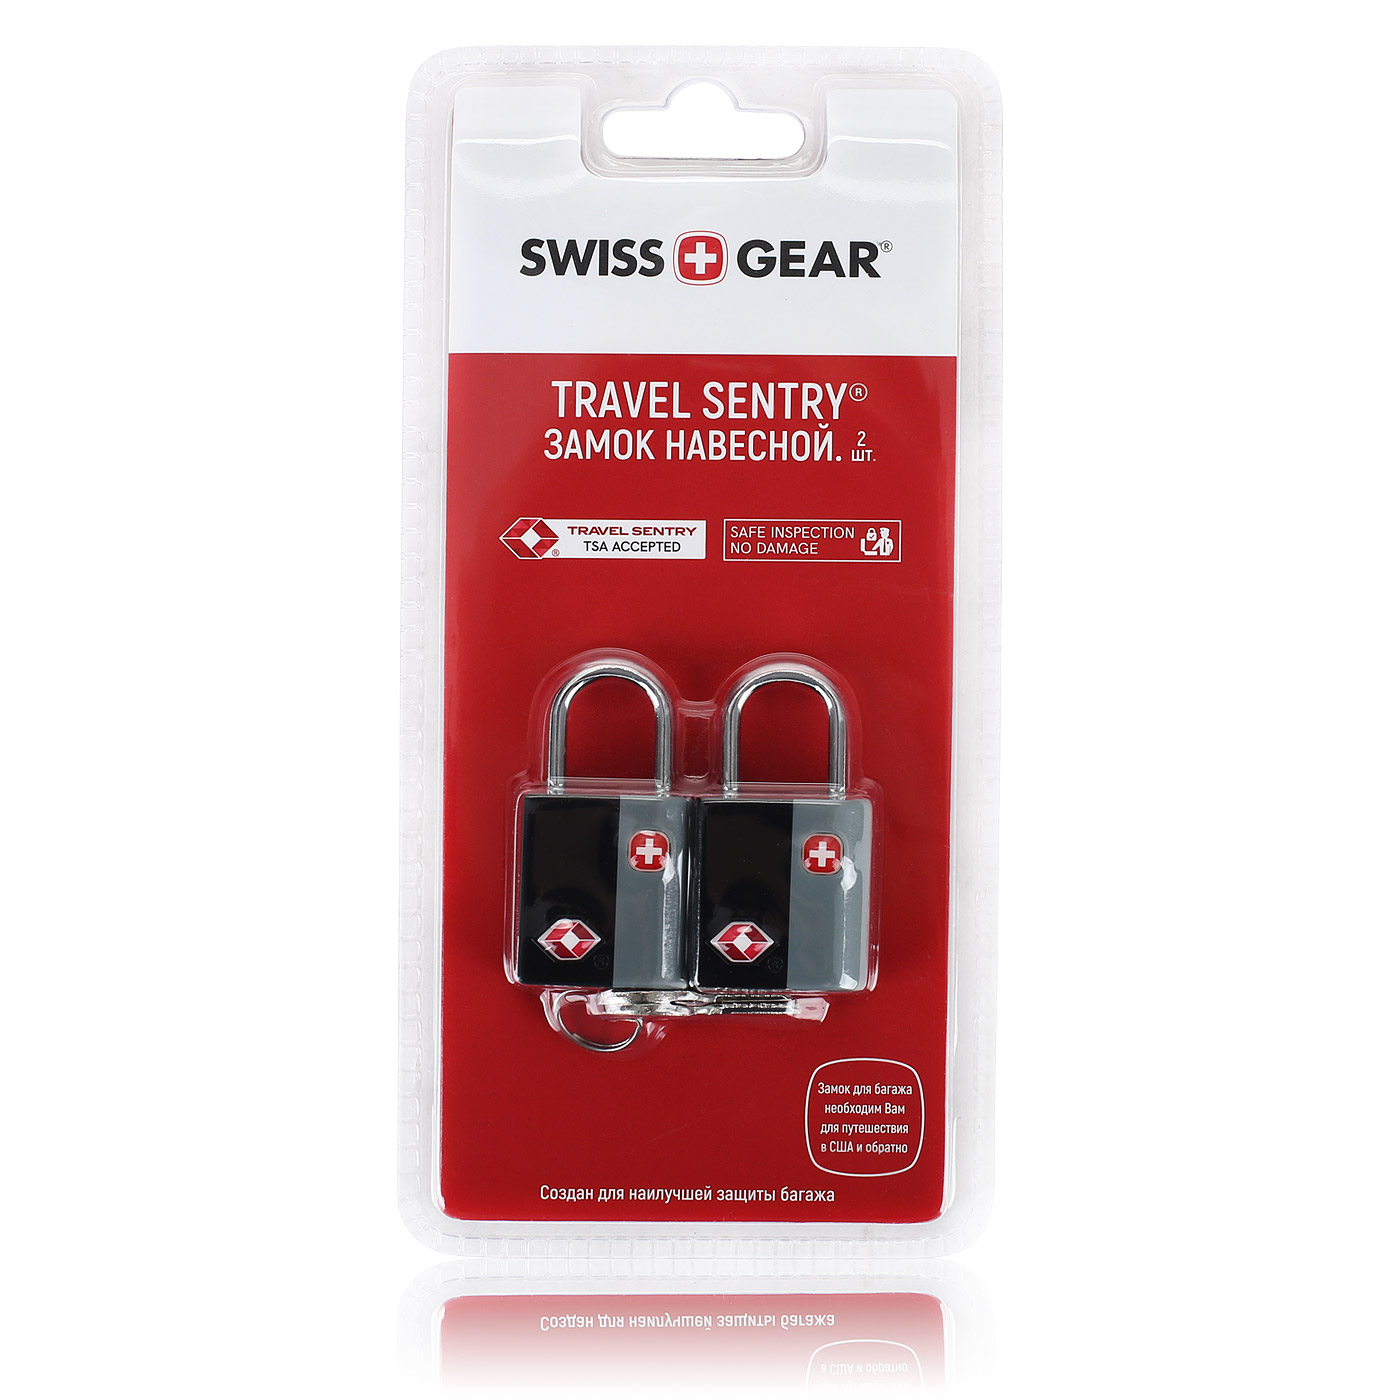 Swissgear Два навесных кодовых замка